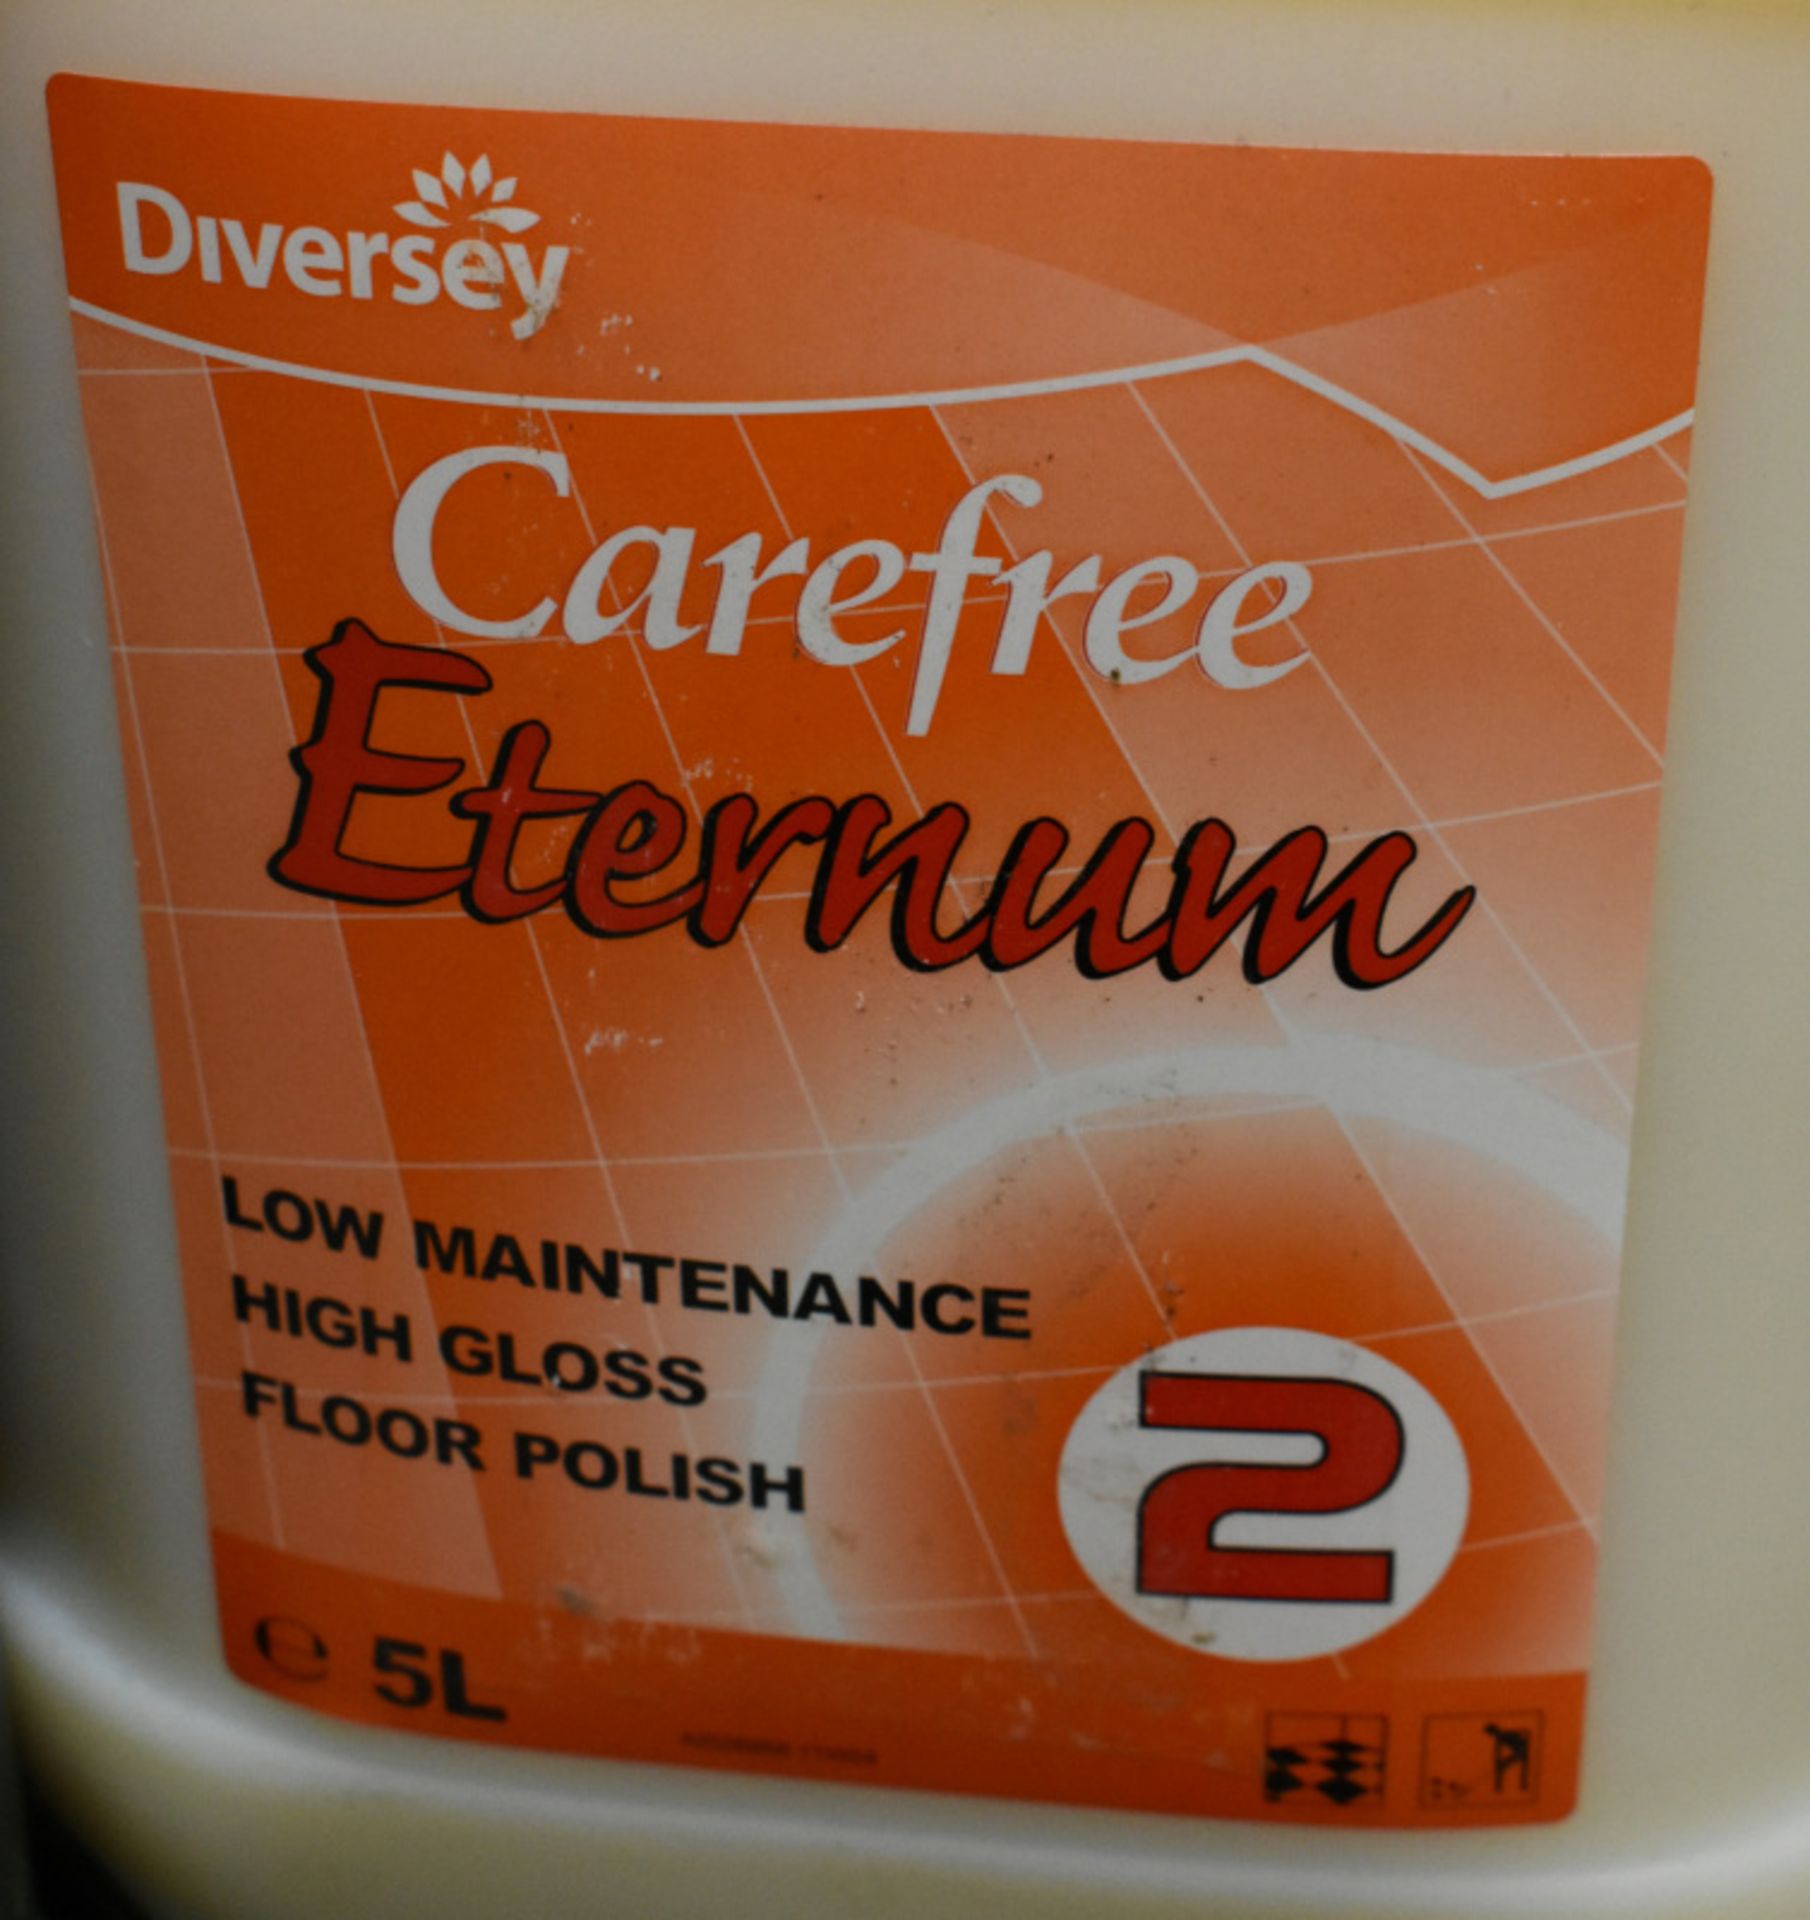 6 x 5L Diversey Carefree Eternum floor polish, 4 x 5L Diversey Break up Degreaser, 20 x 5L - Image 2 of 4